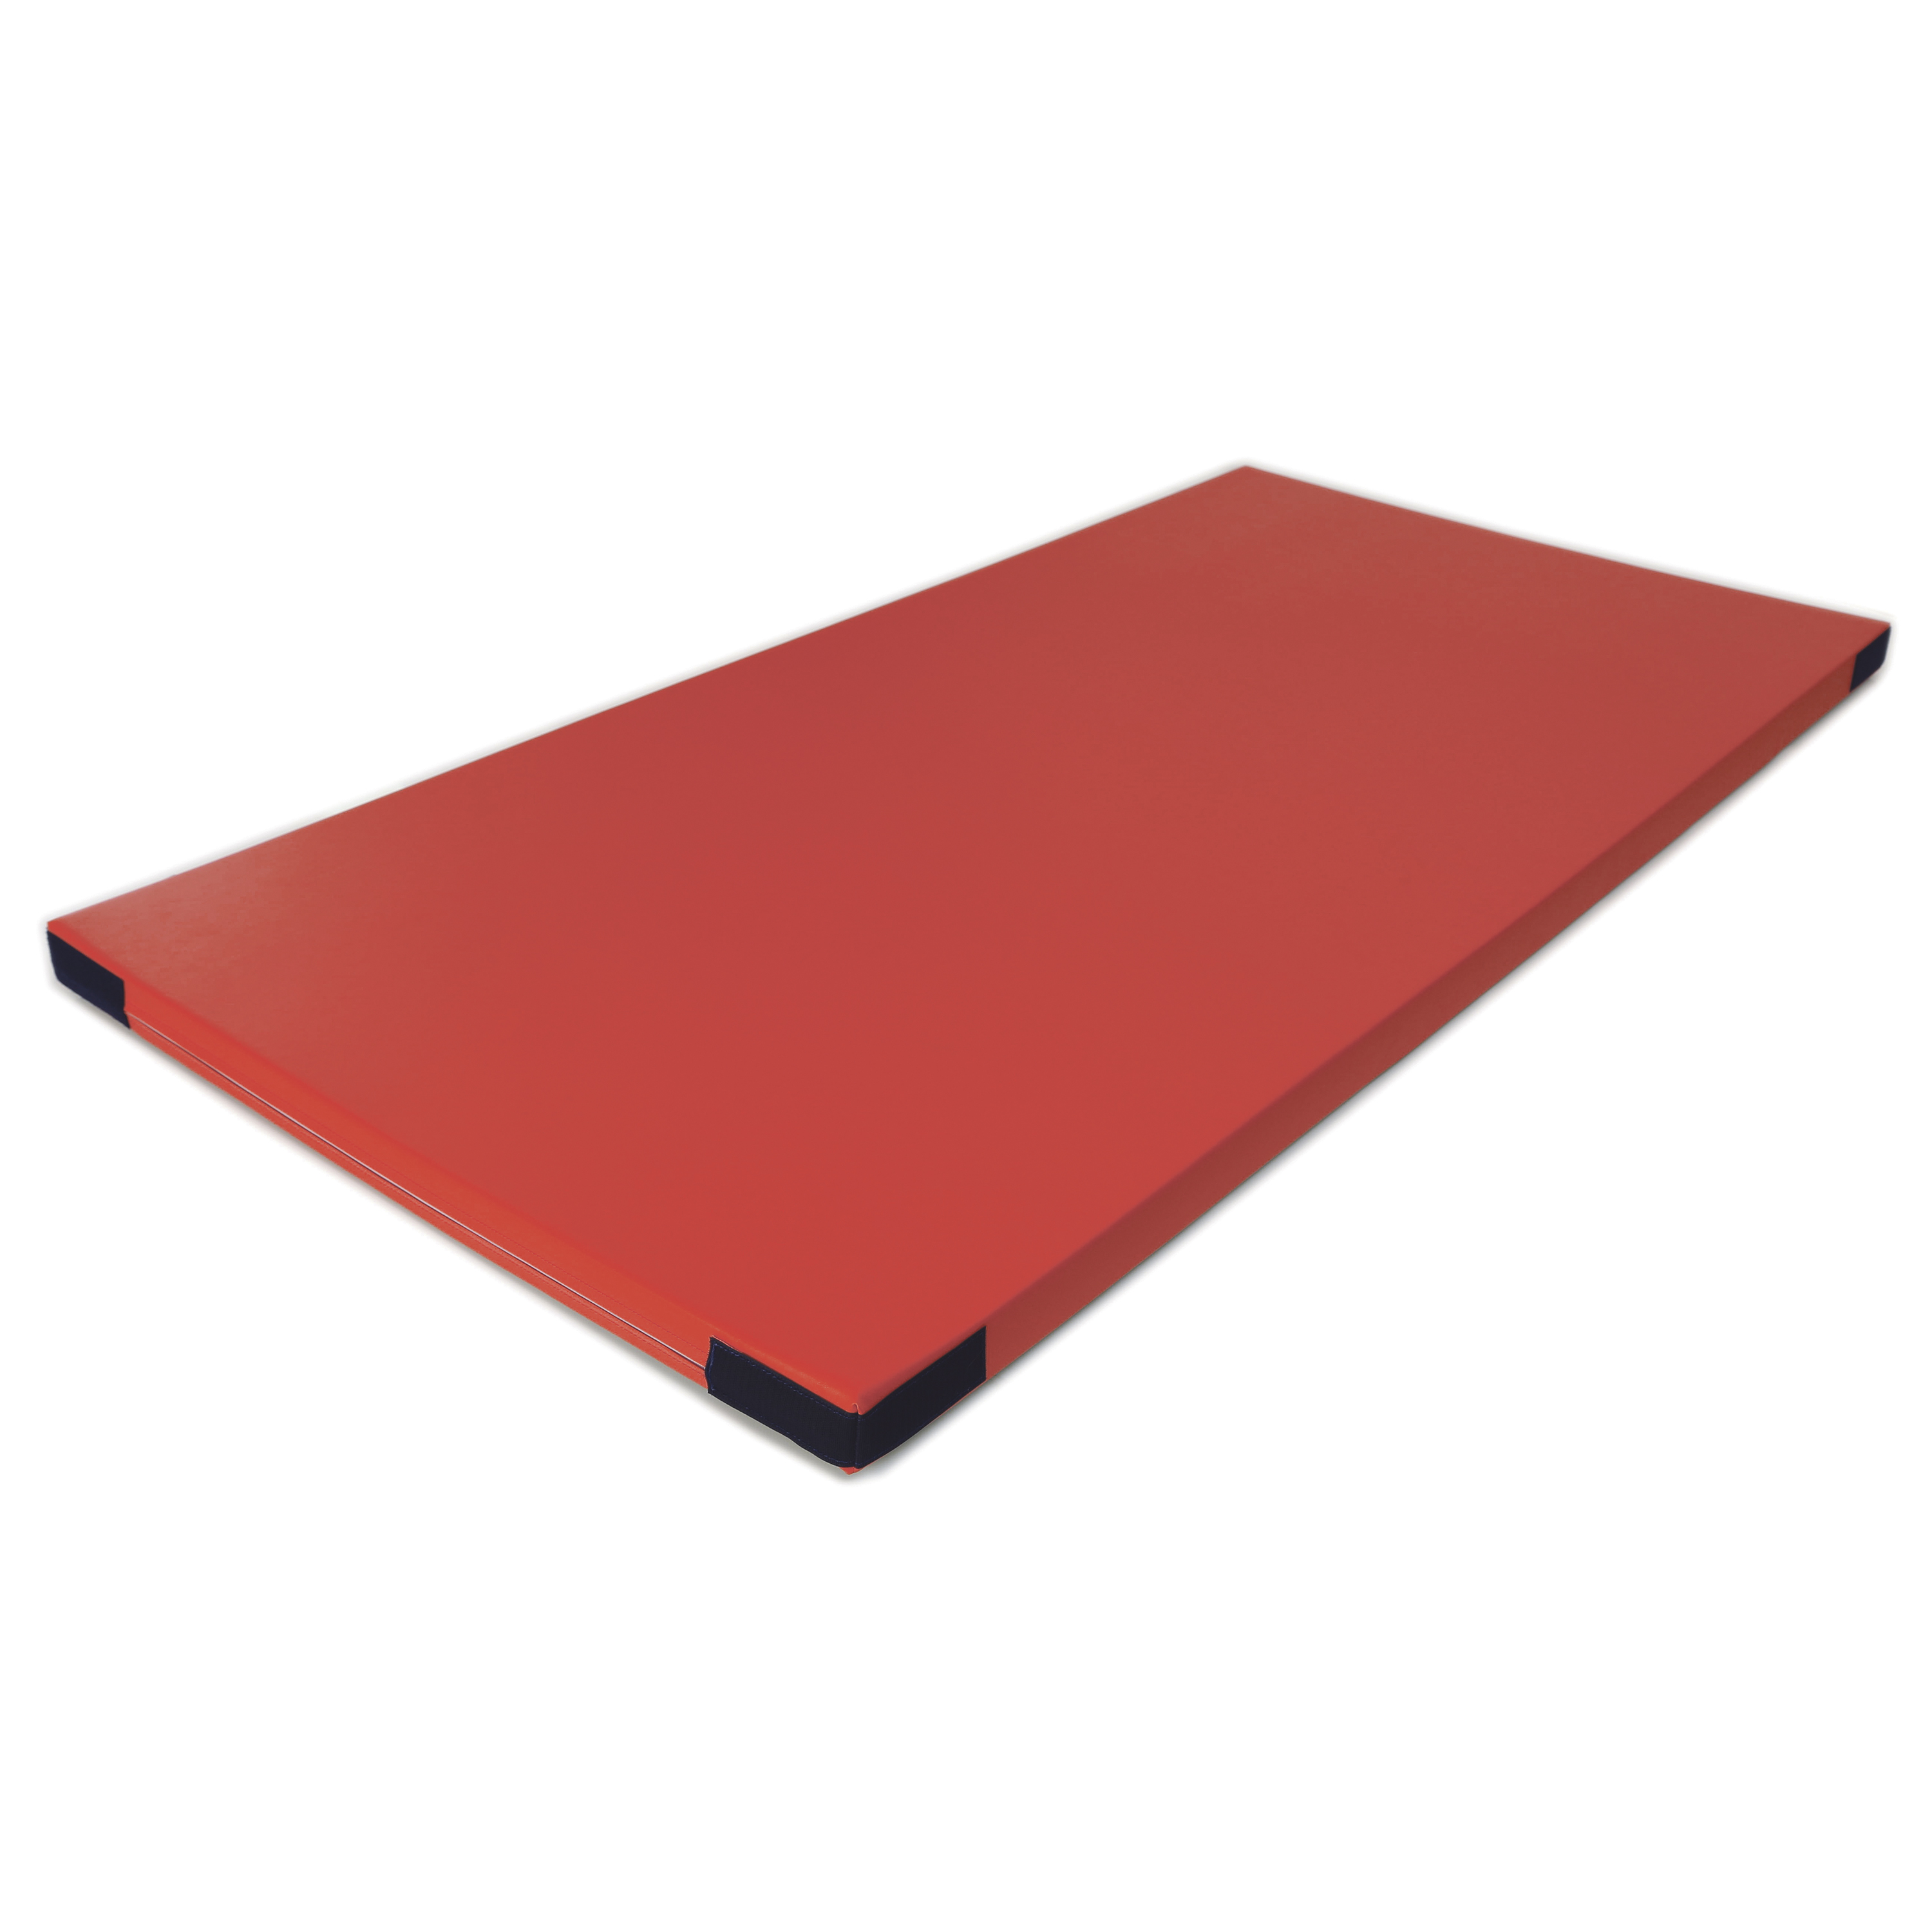 Fallschutzmatte Superleicht 'rot' Klett, 150 x 100 cm